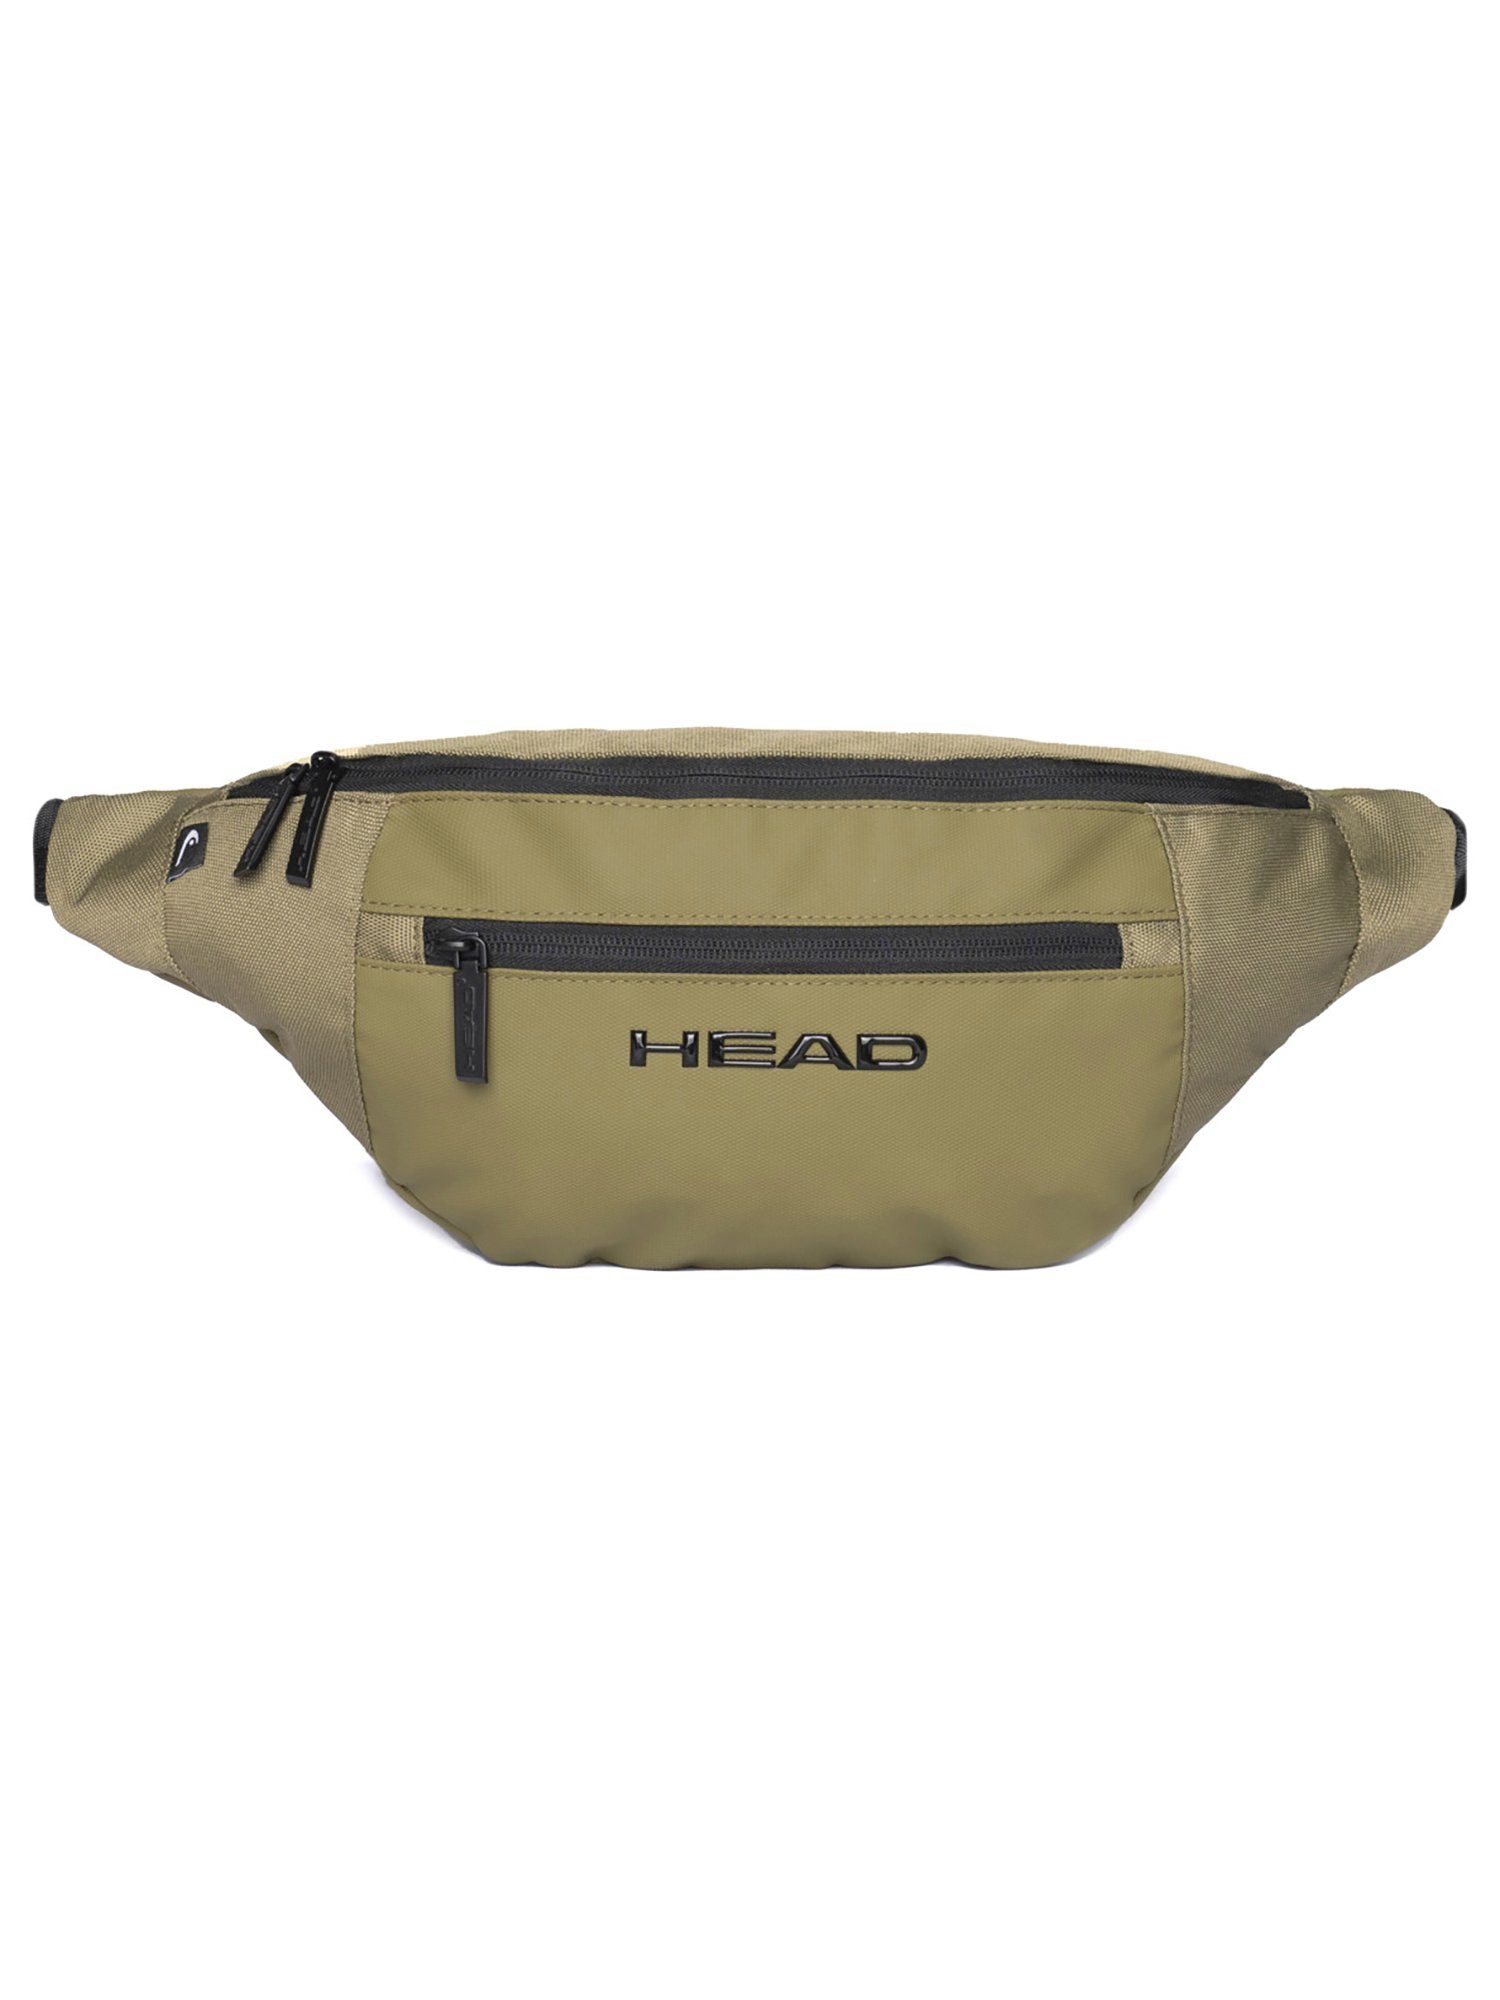 Gürteltasche Head Waistbag Game Militärgrün